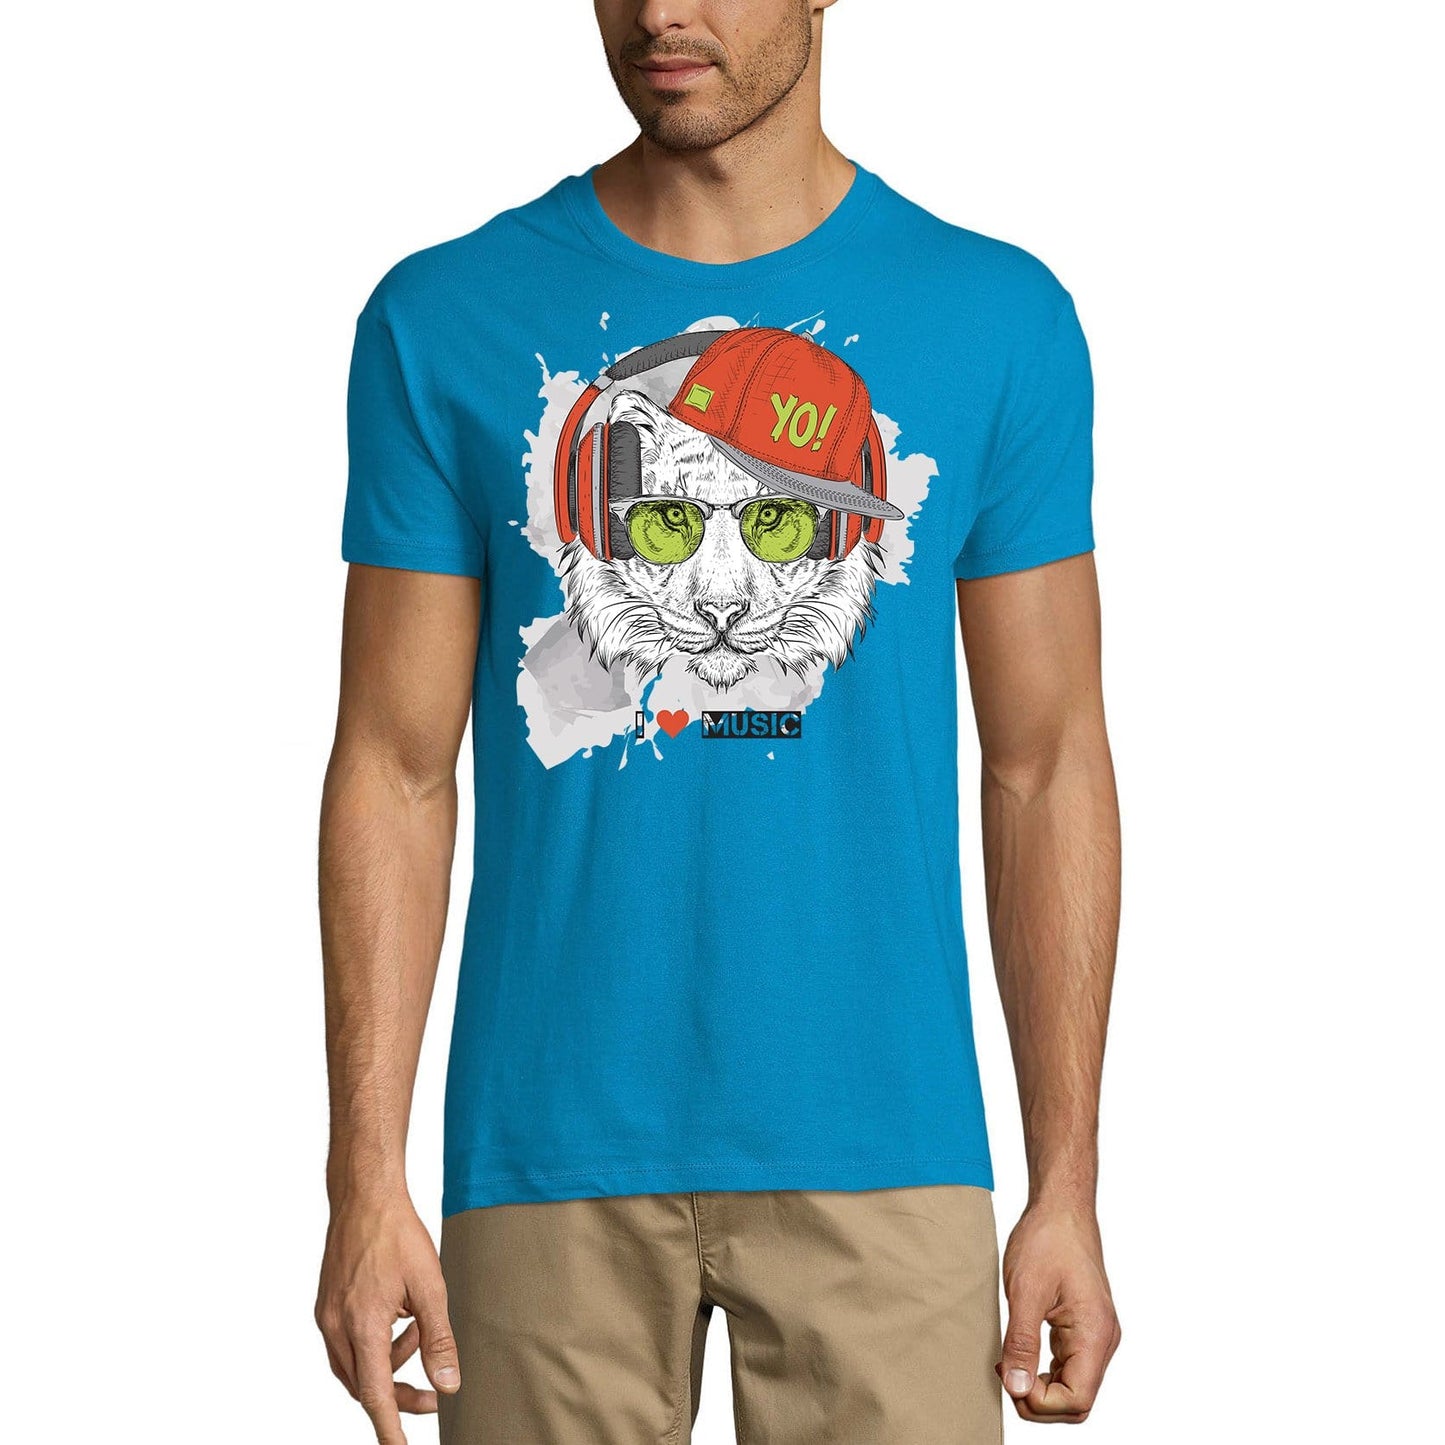 ULTRABASIC Men's Novelty T-Shirt Cool Tiger Yo - I Love Music Funny Tee Shirt